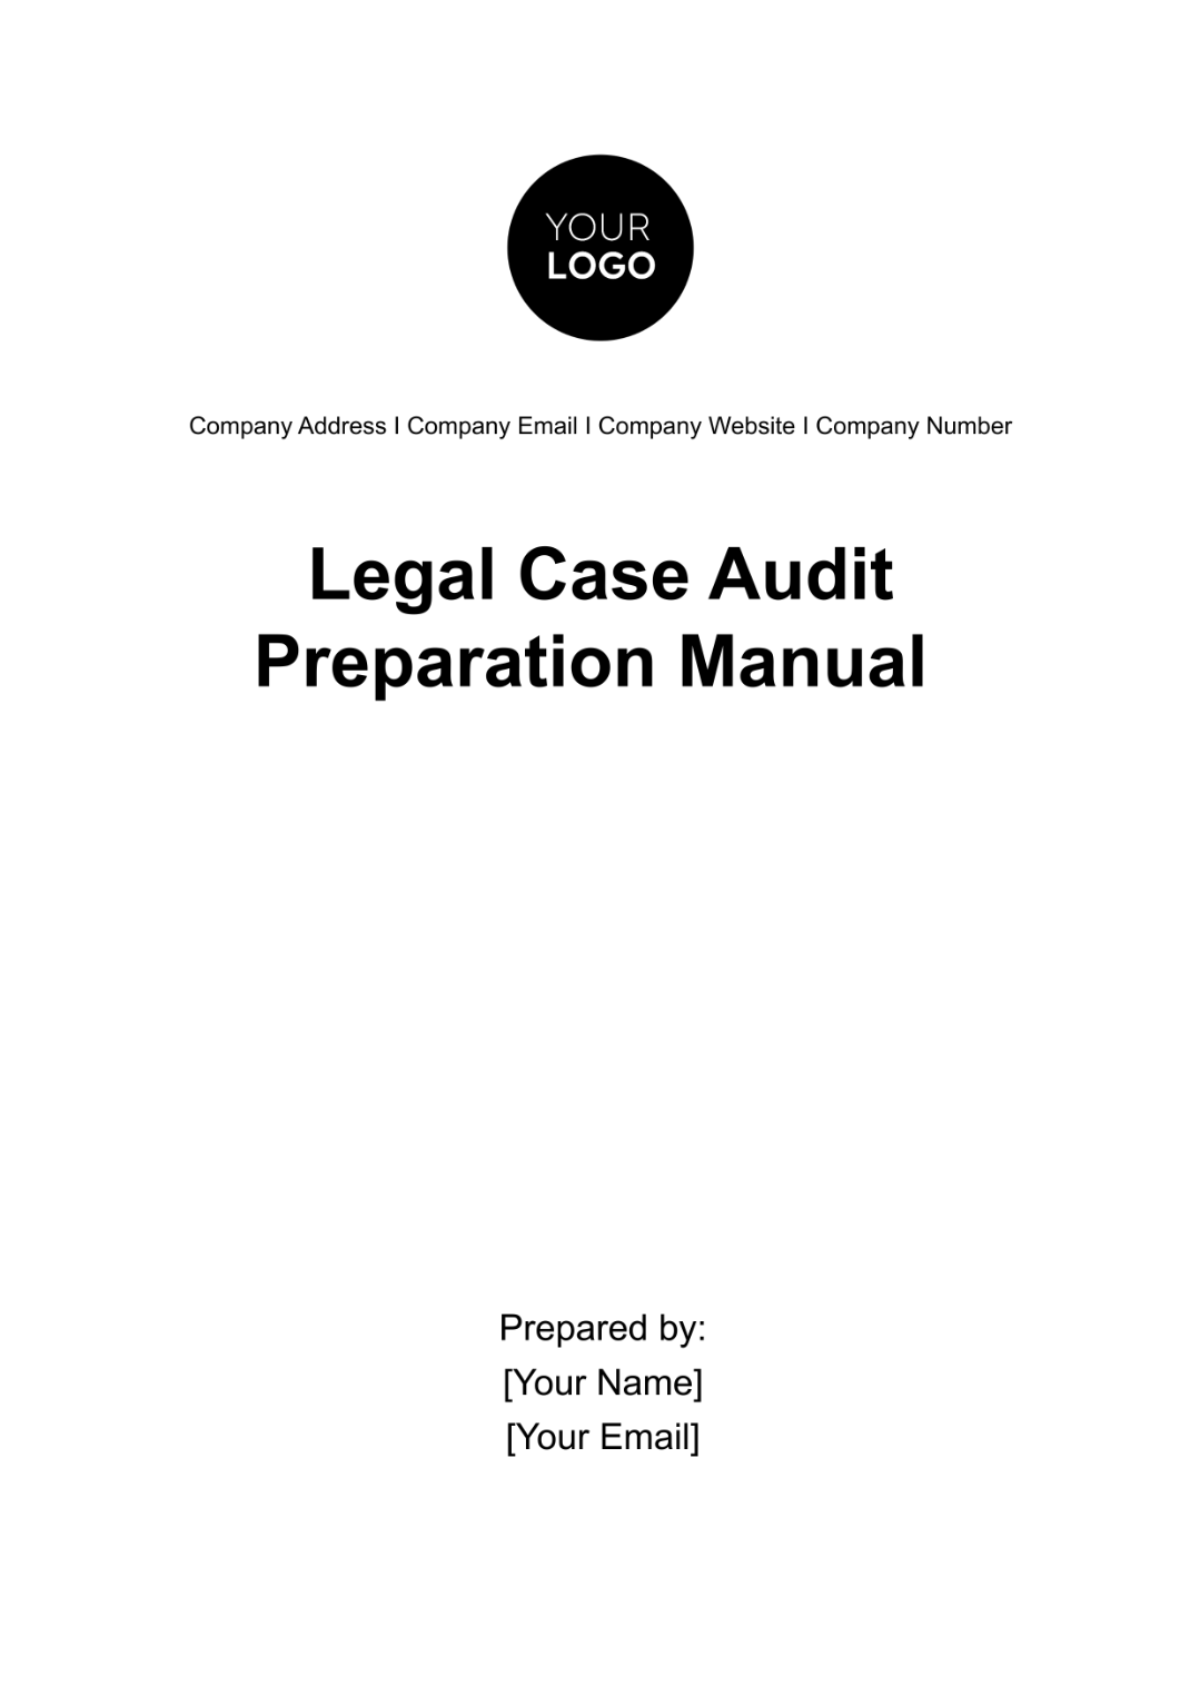 Free Legal Case Audit Preparation Manual Template